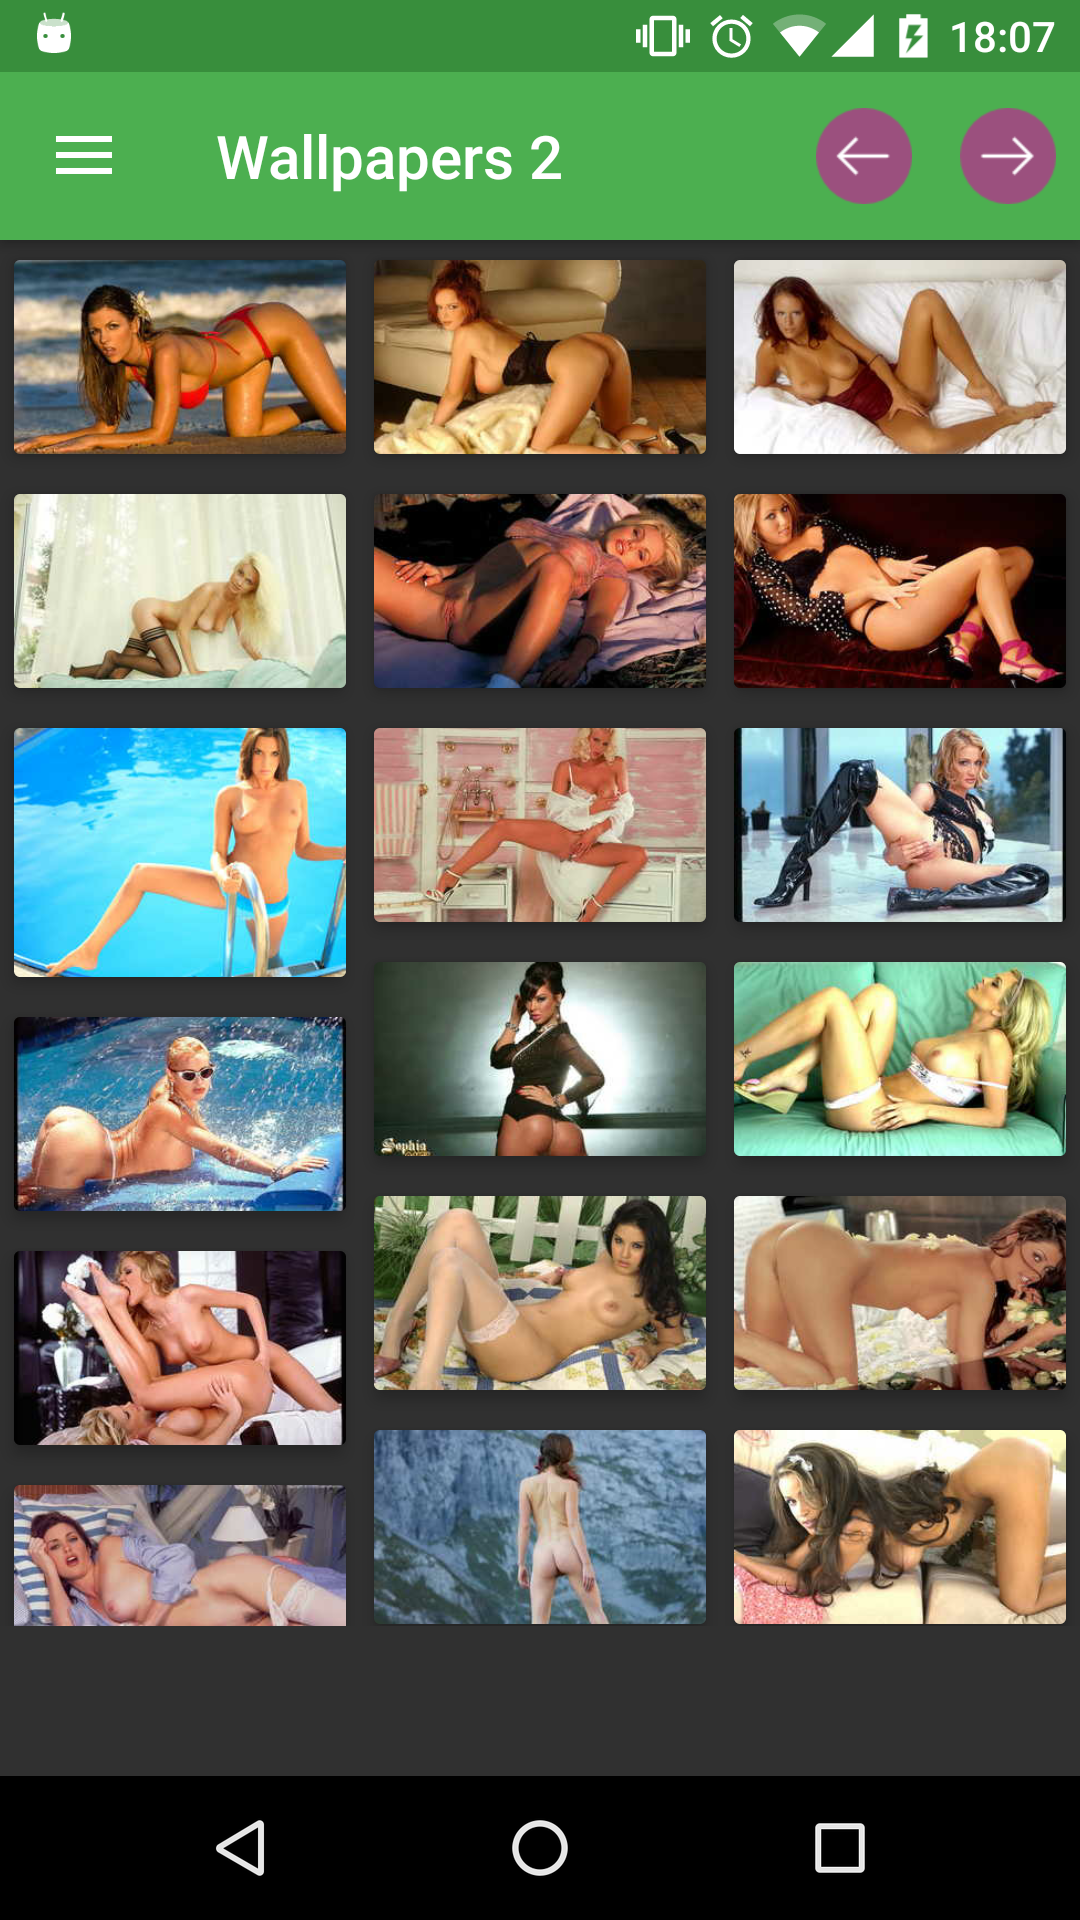 Rx Erotic Wallpapers porn,wallpapers,mainichi,apps,pic,best,hentai,app,sexy,pictures,anoko,pics,anime,erotic,backgrounds,apk,bisexpics,download,galleries,henati